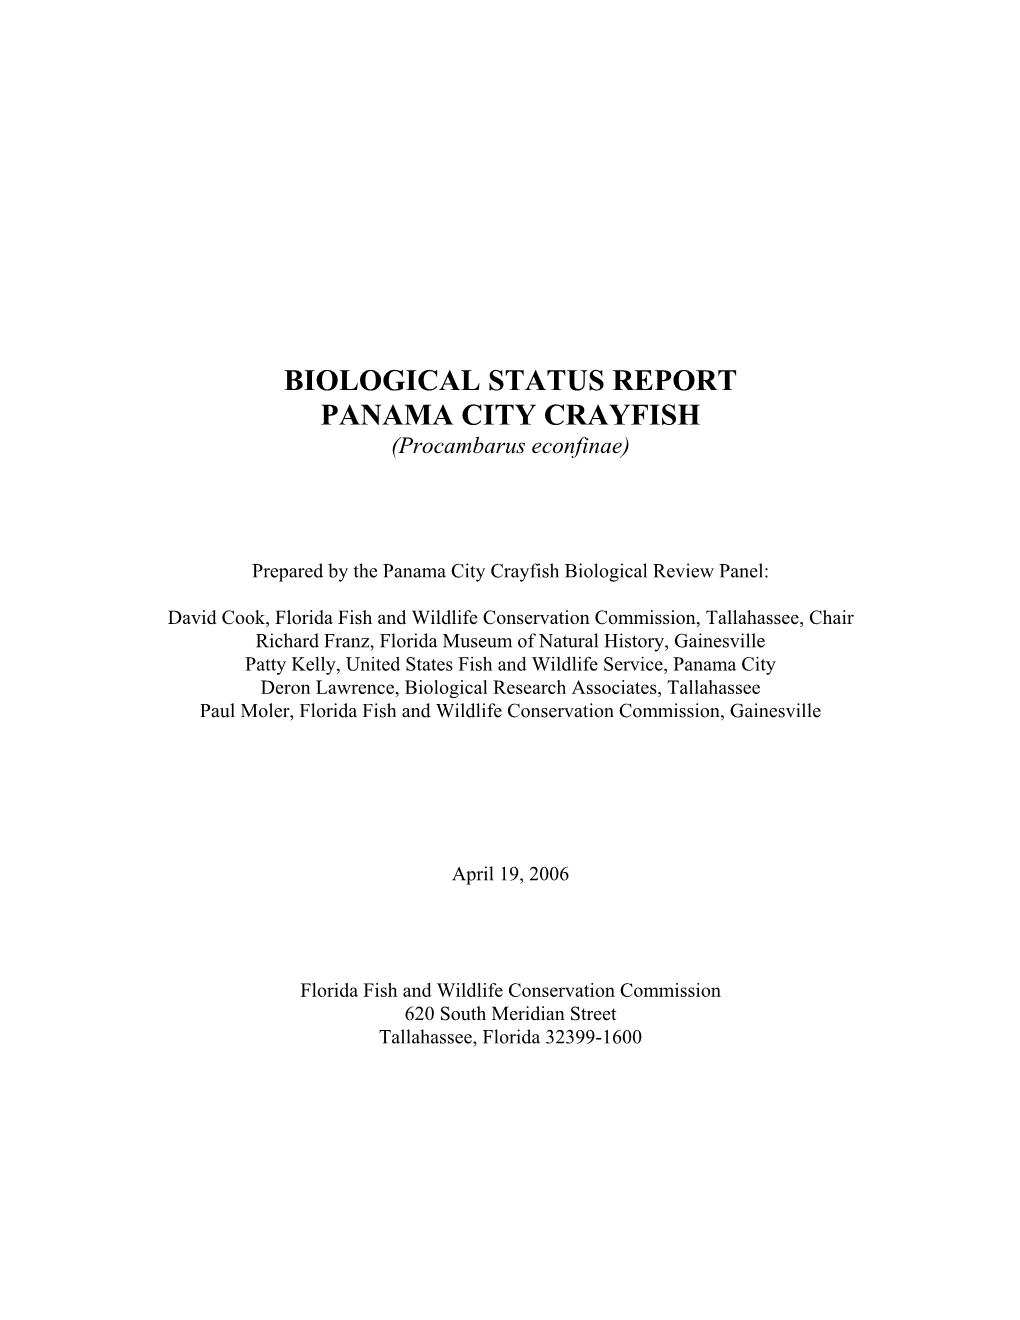 Preliminary Biological Status Report